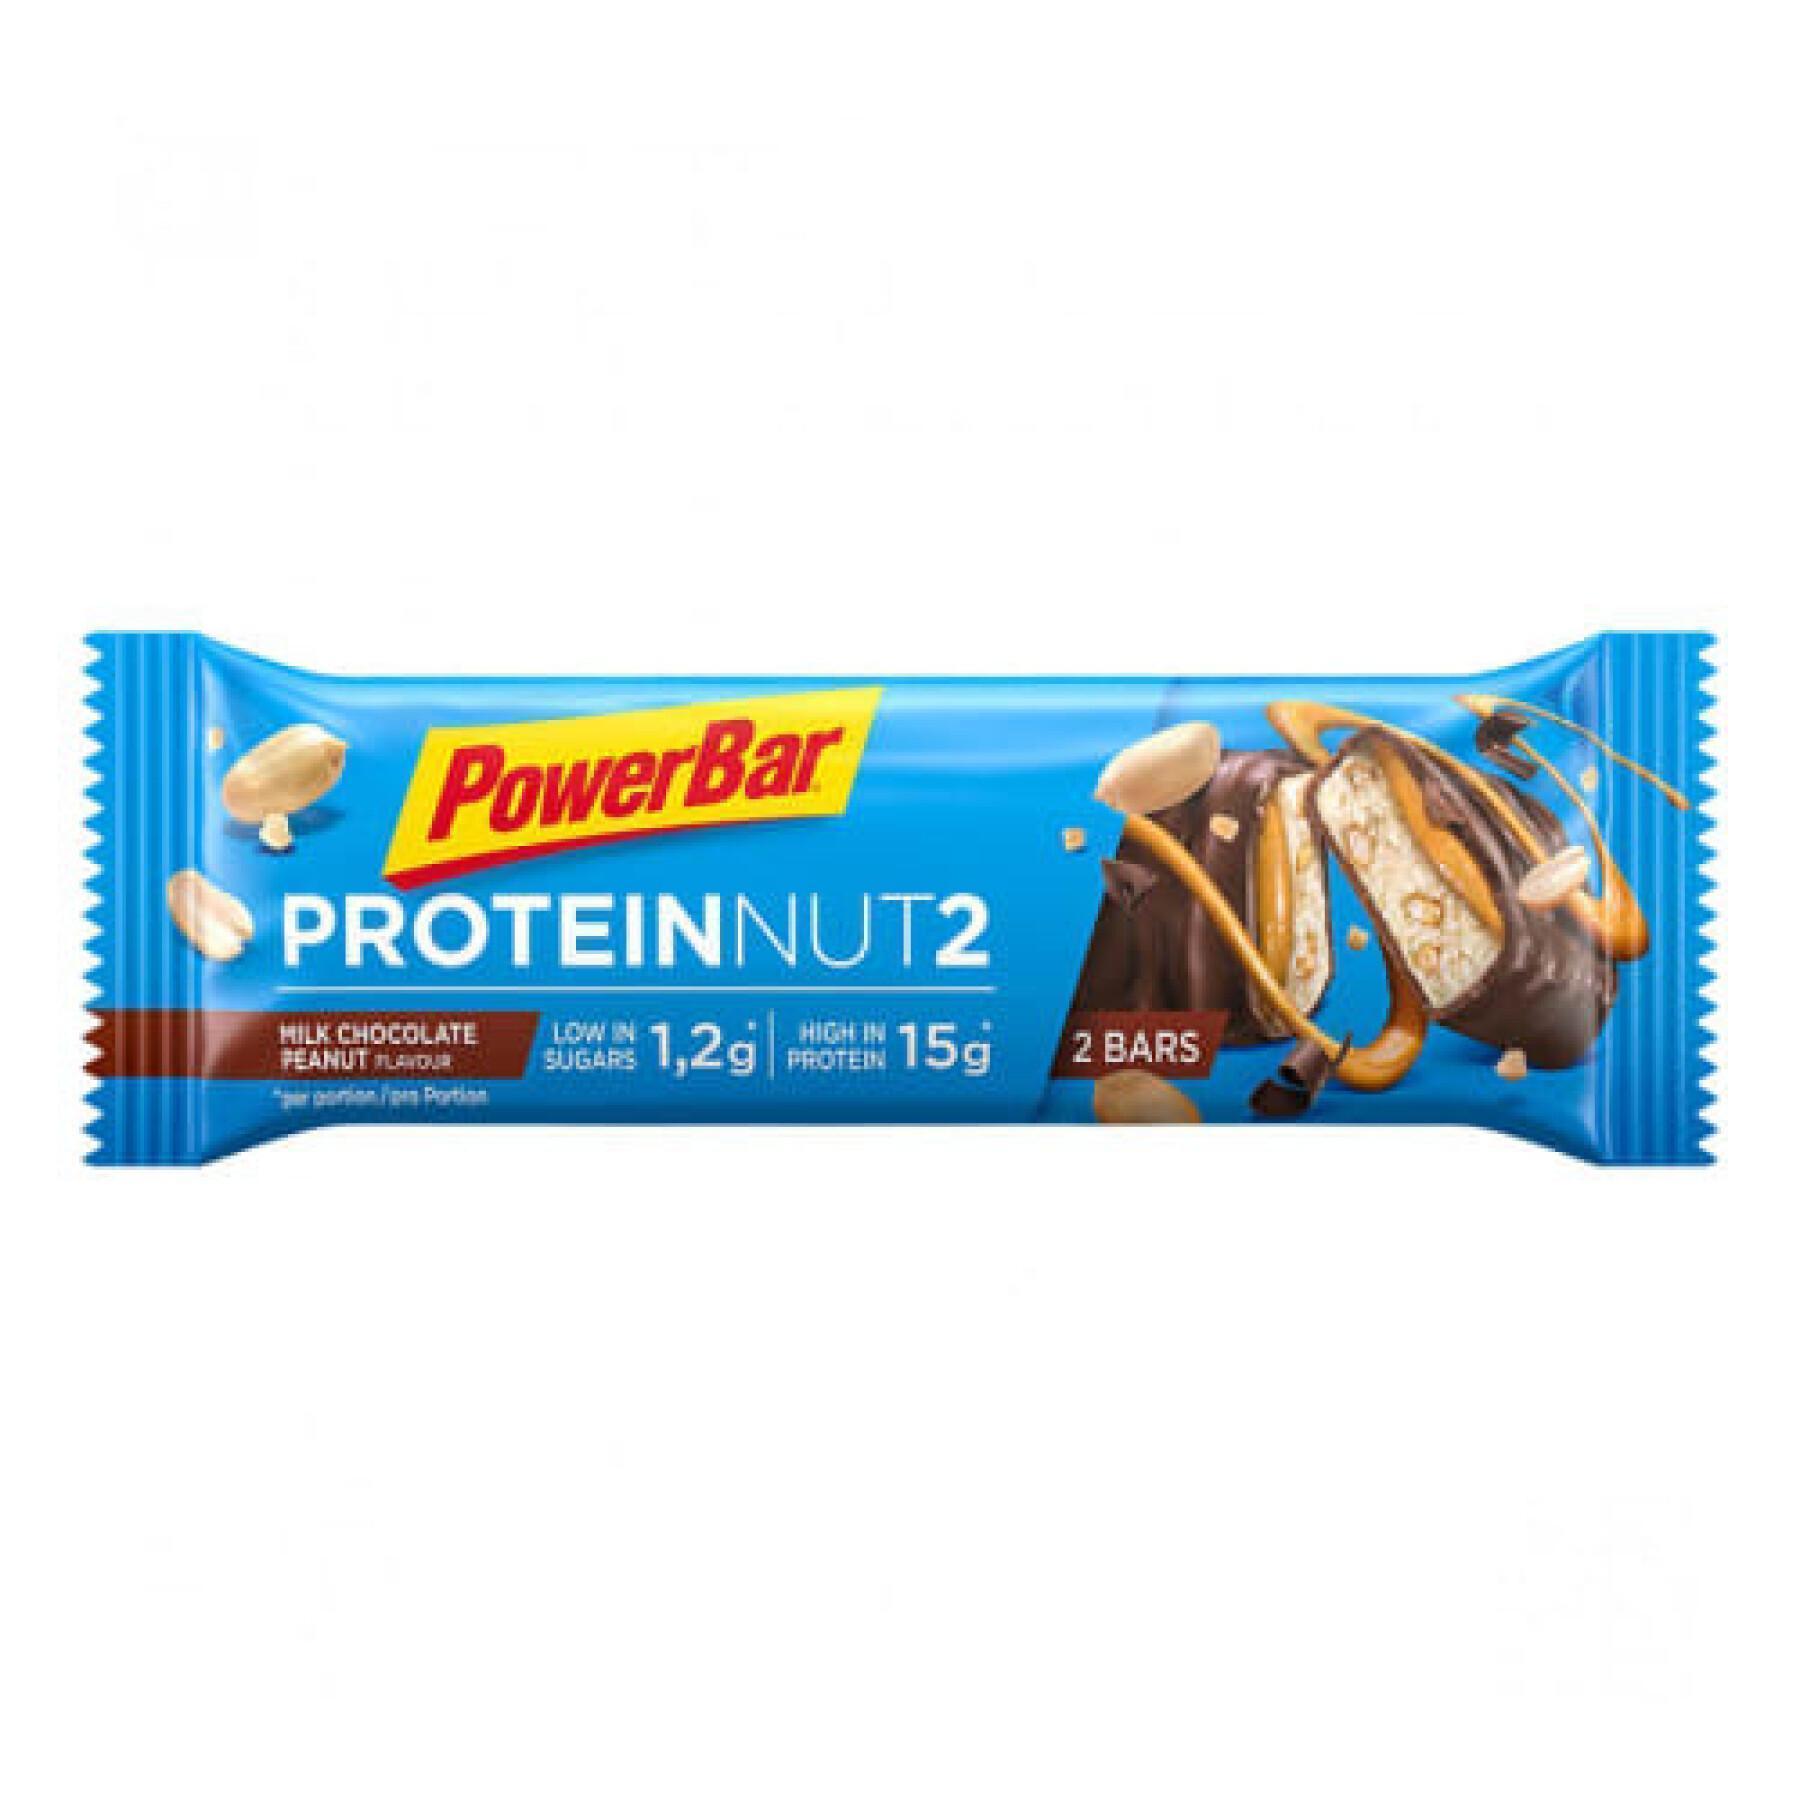 Pacote de 18 barras PowerBar Protein Nut2 - Milk Chocolate Peanut